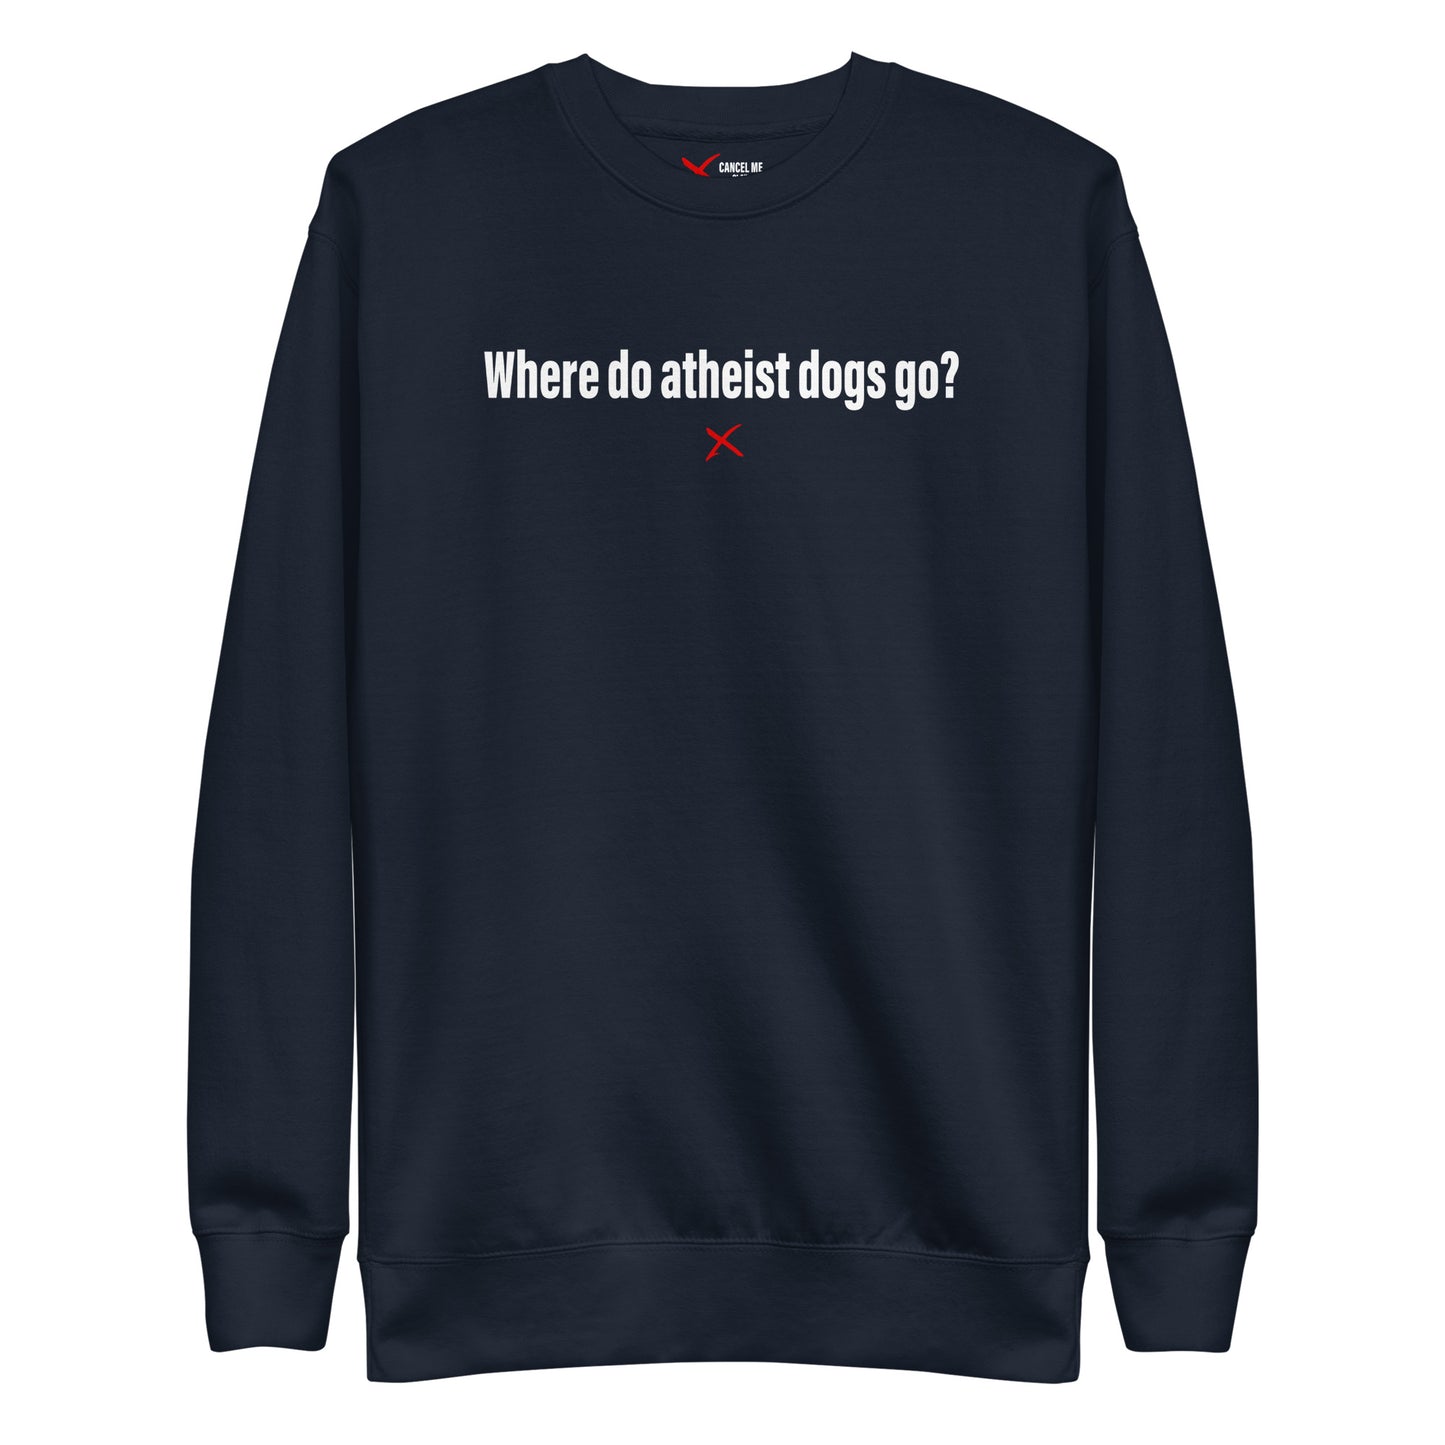 Where do atheist dogs go? - Sweatshirt